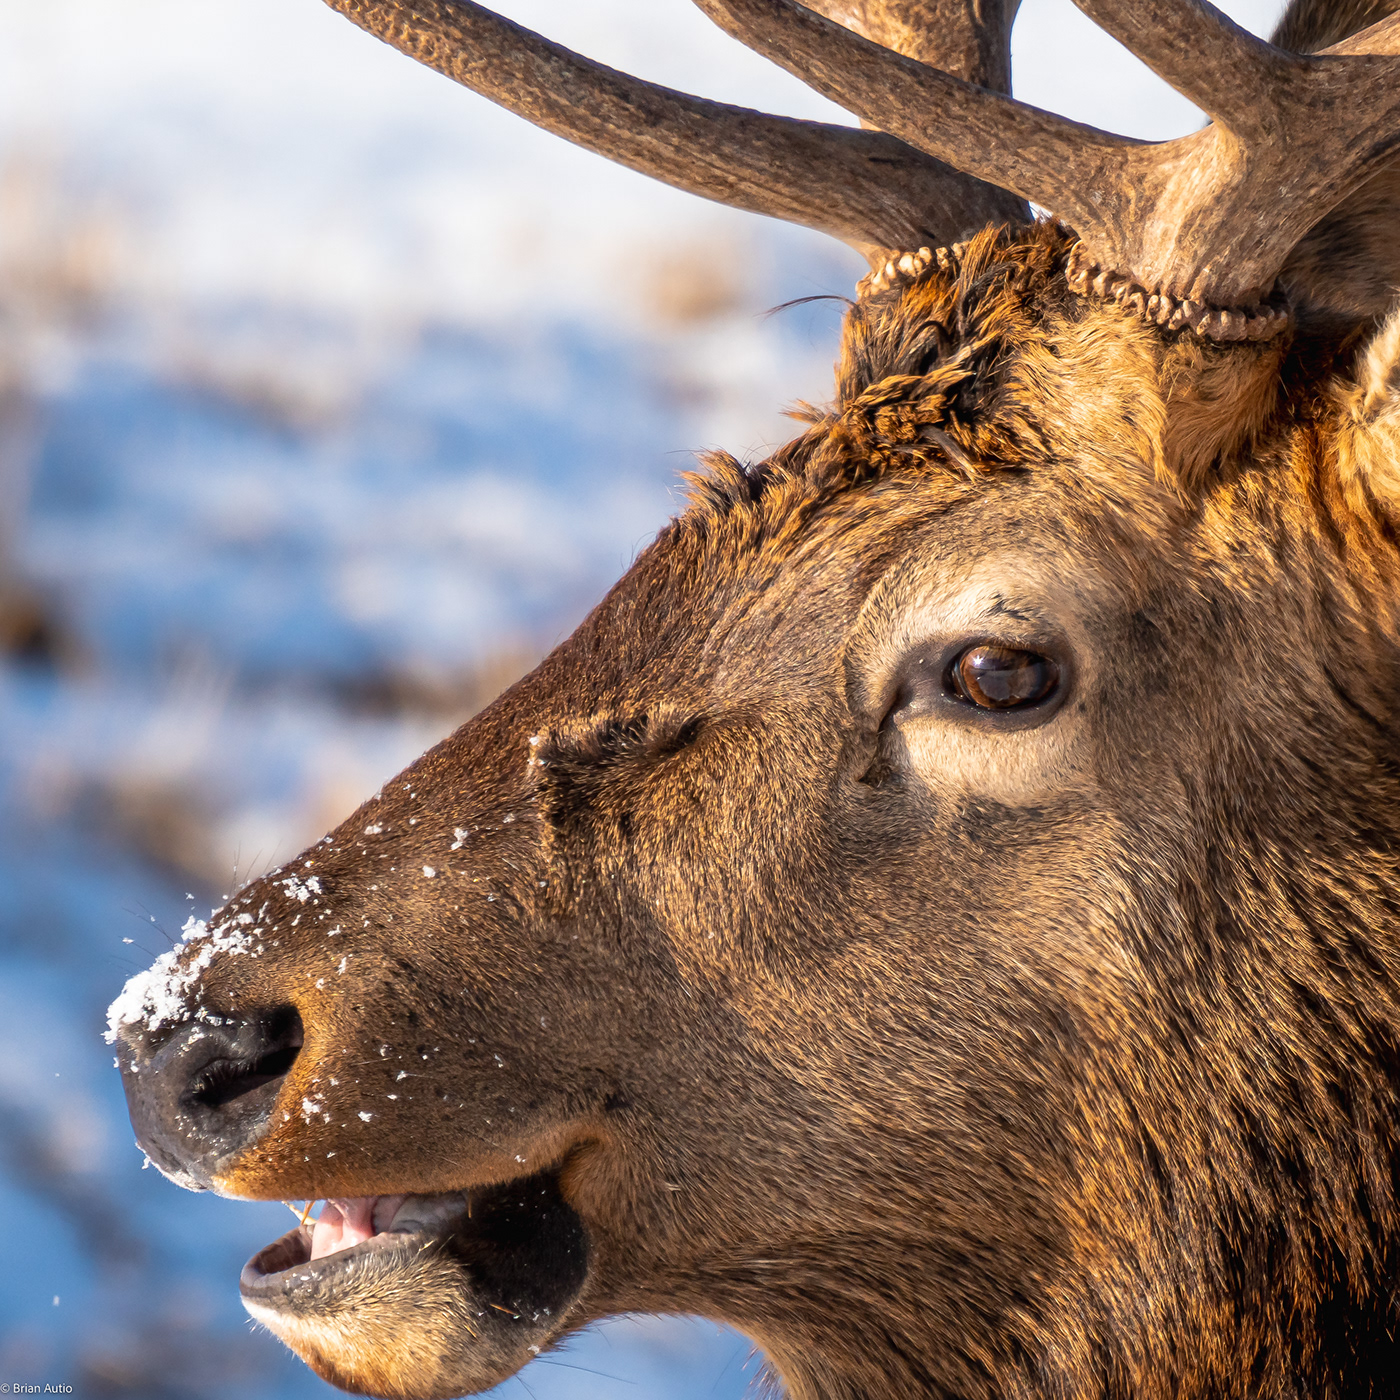 Colorado elk Nature Photography  rockies Rocky Mountains snow winter